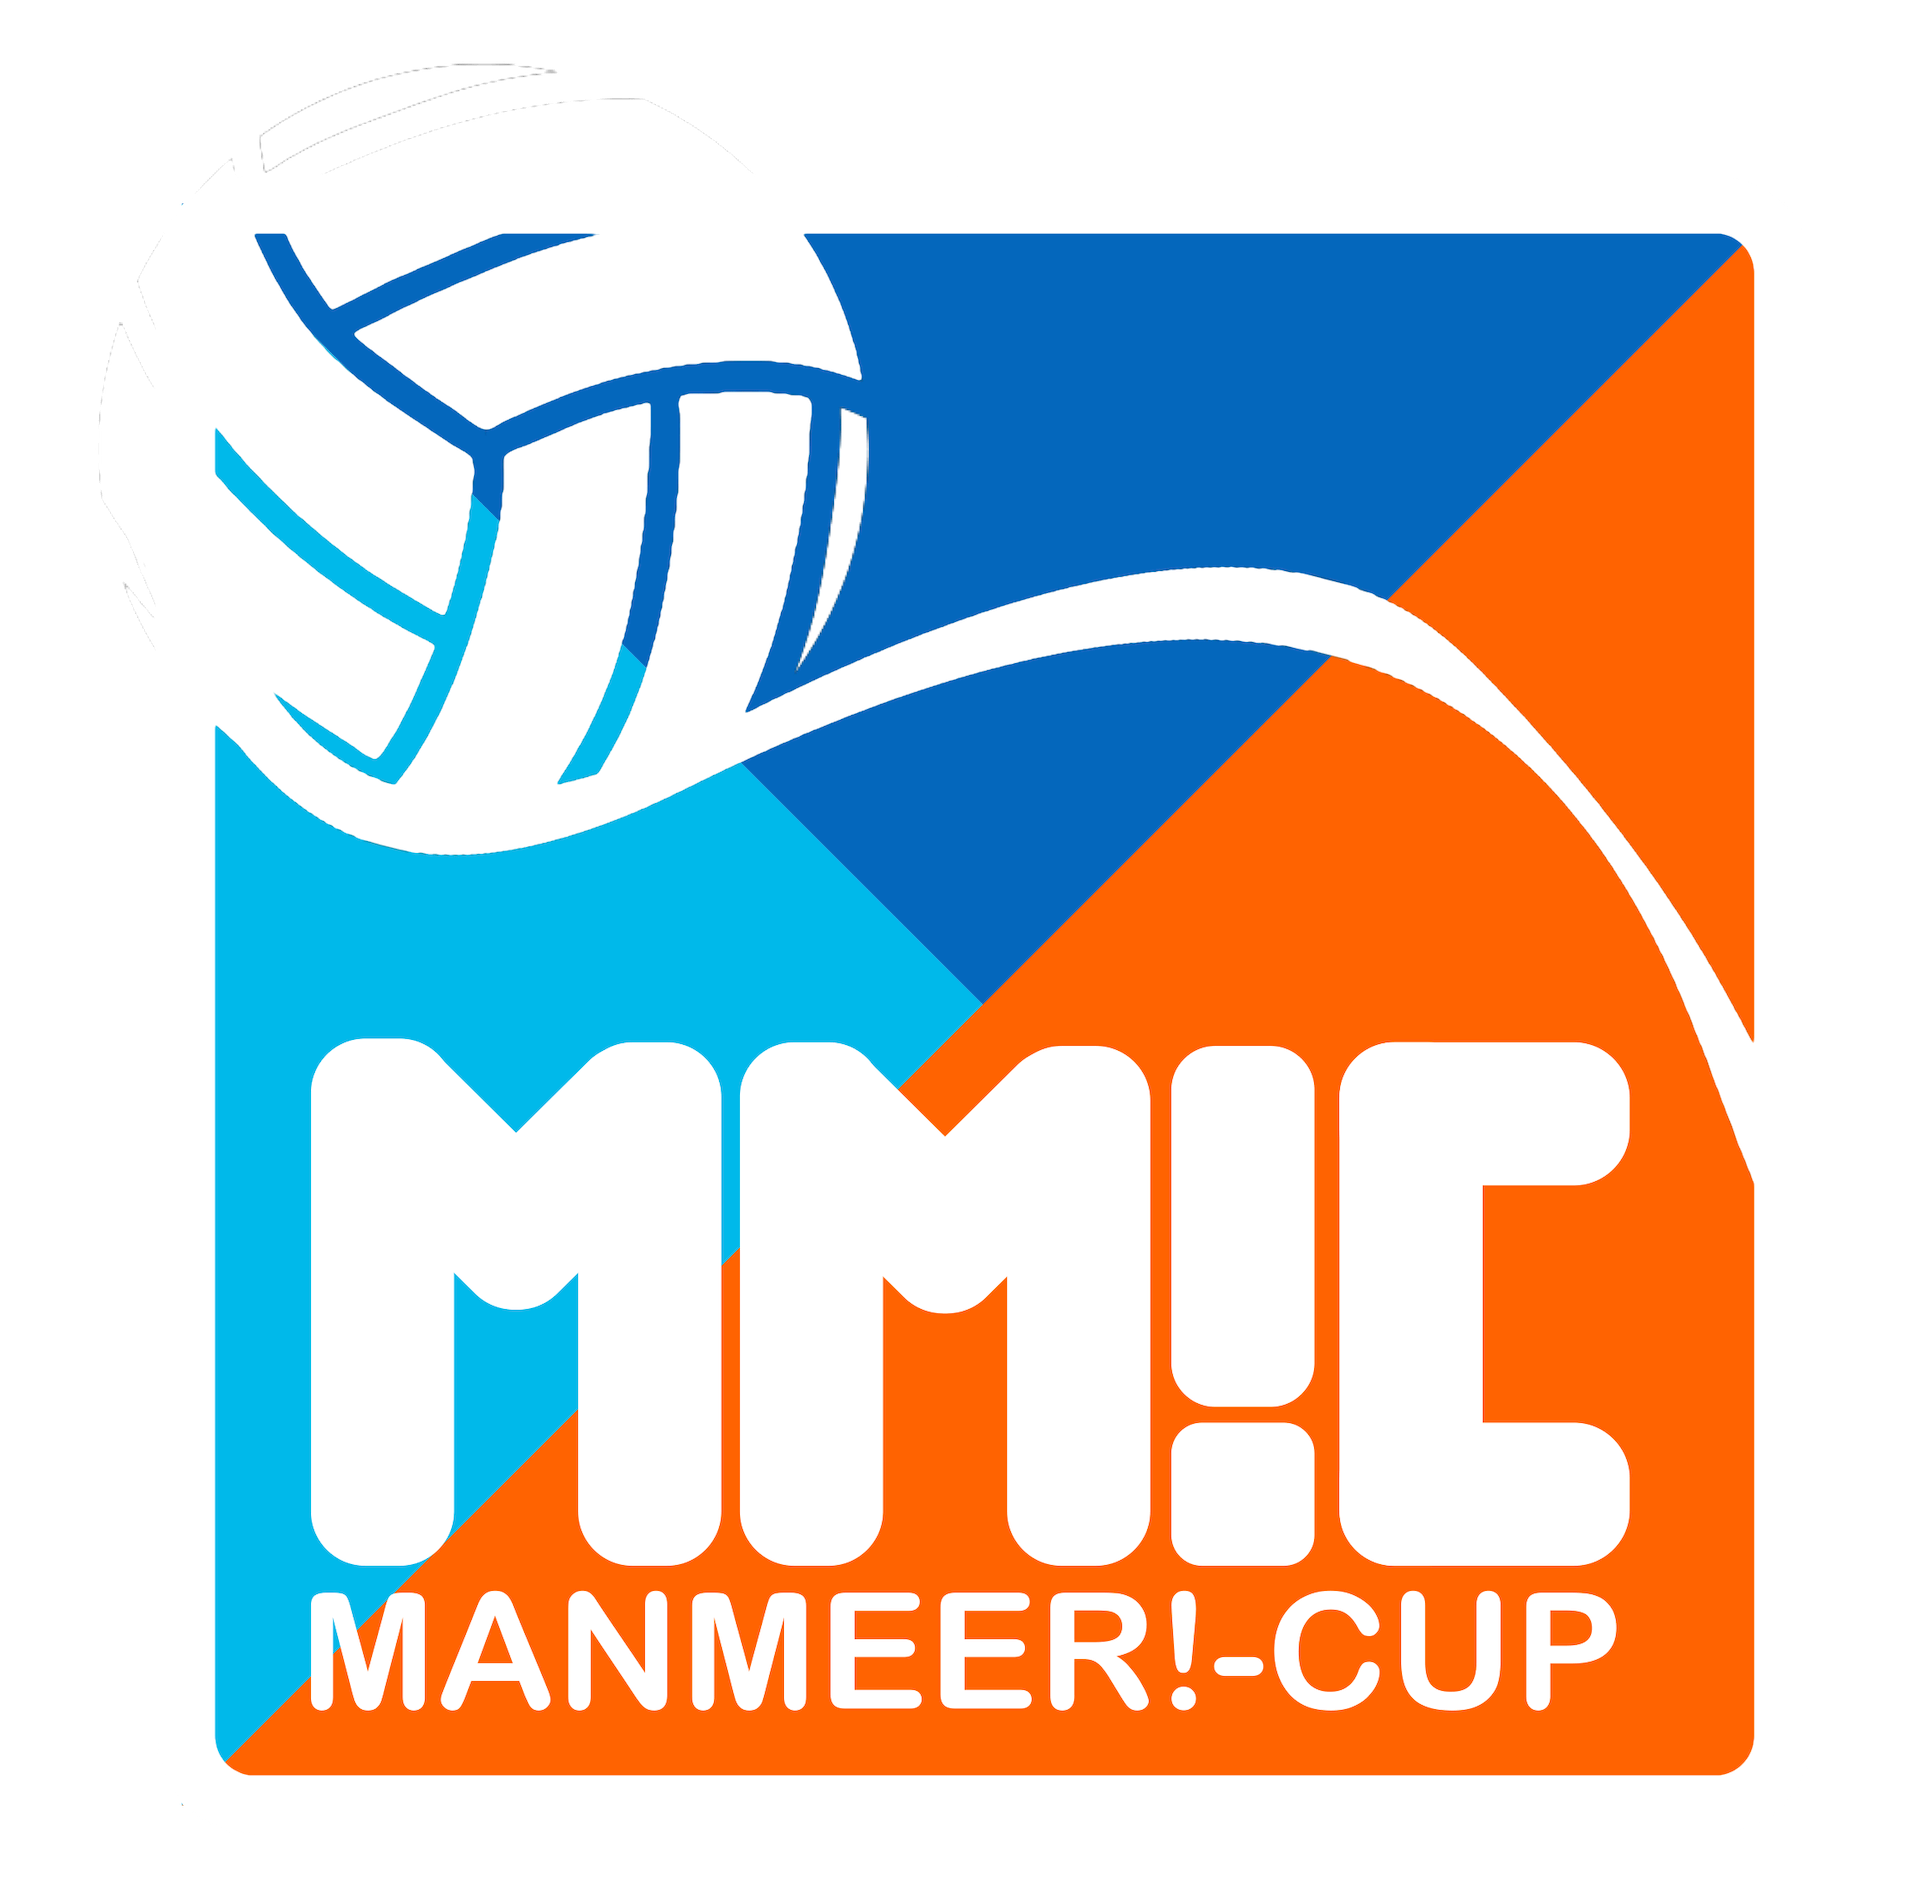 Nieuwe logo ManMeer!-Cup